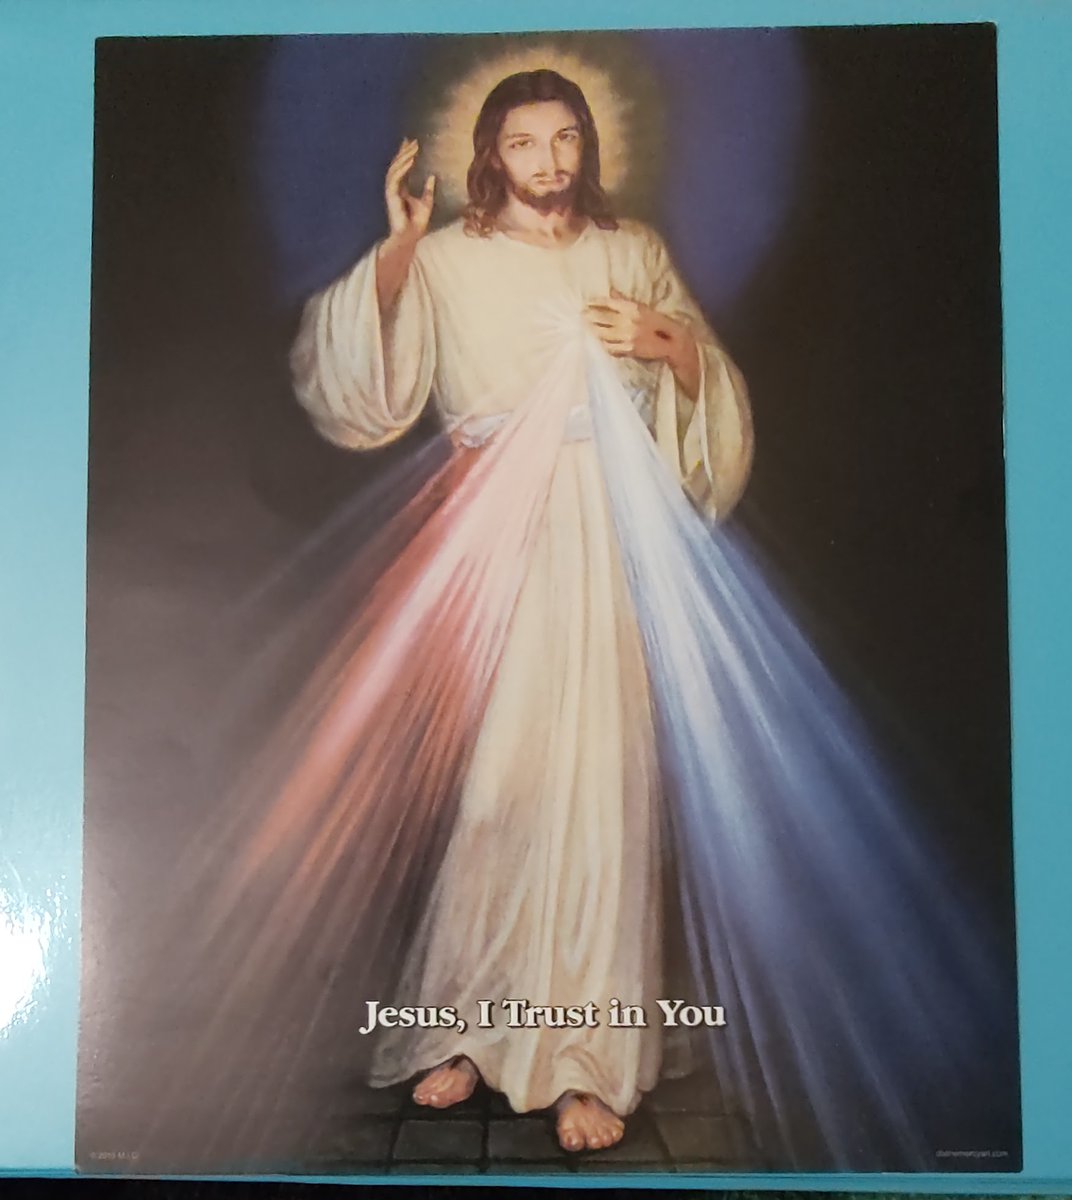 Pray the chaplet of Divine Mercy
Link below how to pray the Chaplet of Divine Mercy
thedivinemercy.org/message/devoti…